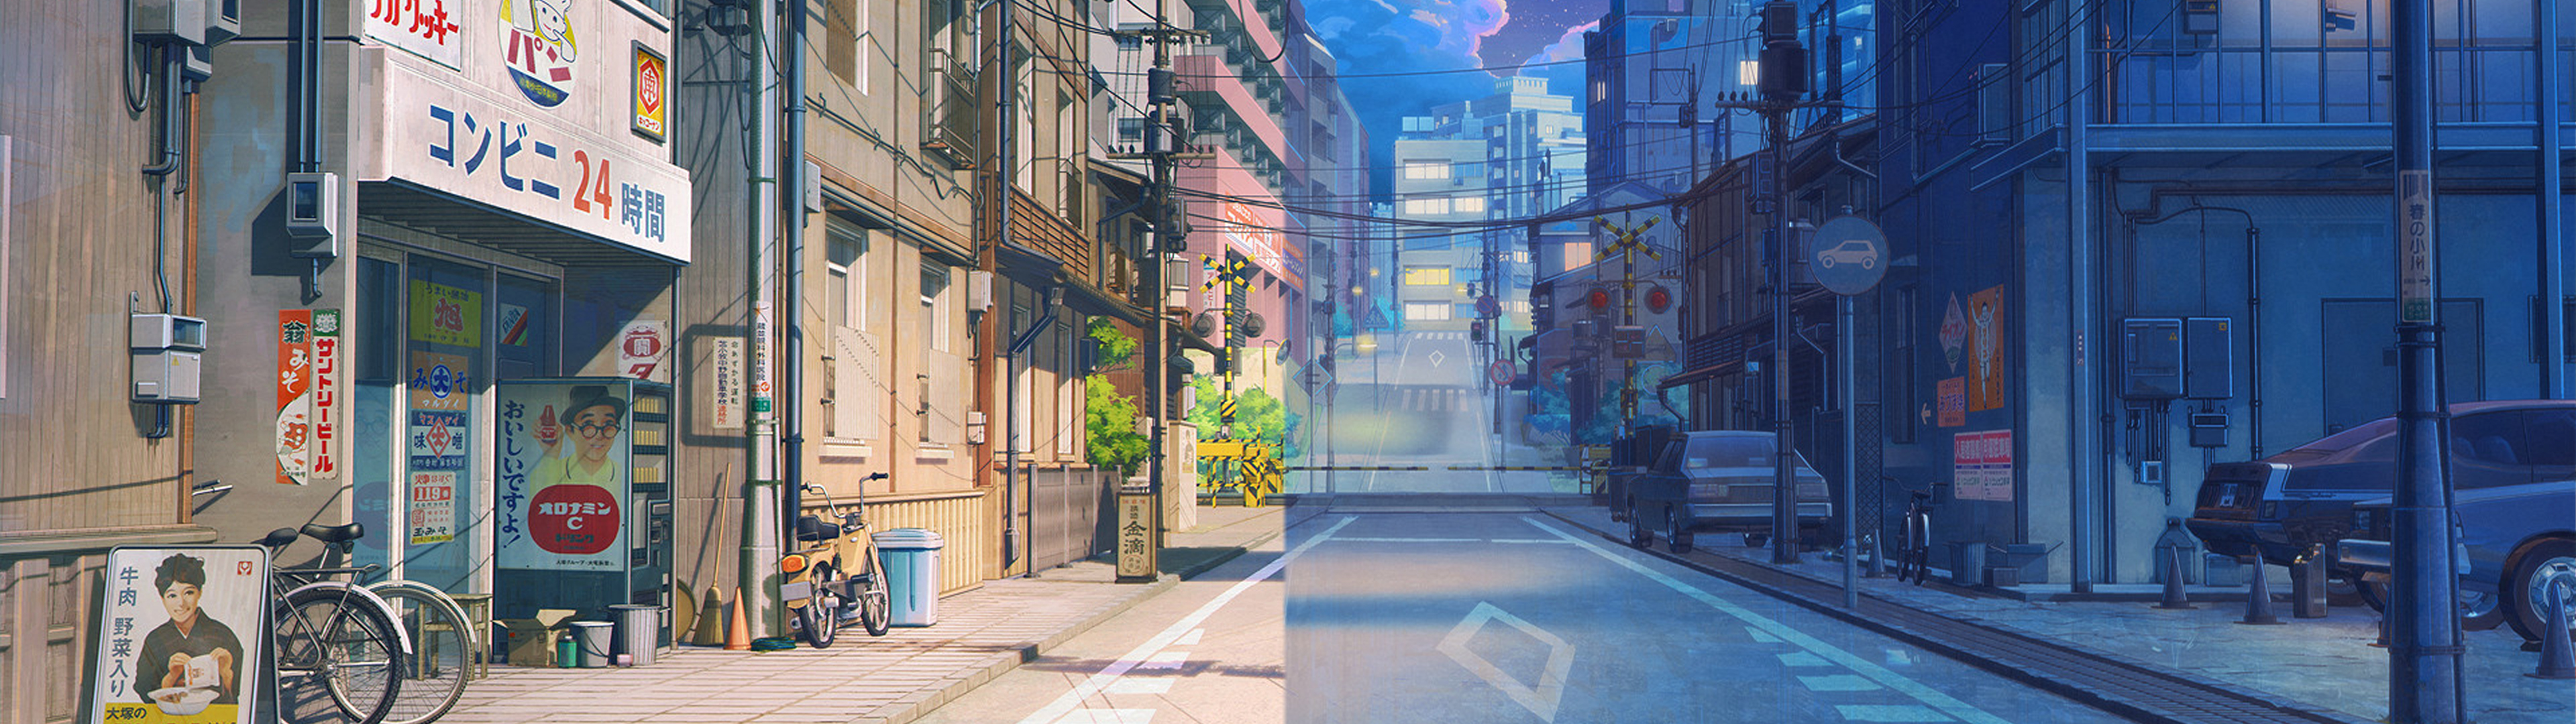 Anime Street - 3840x1080 Wallpaper 